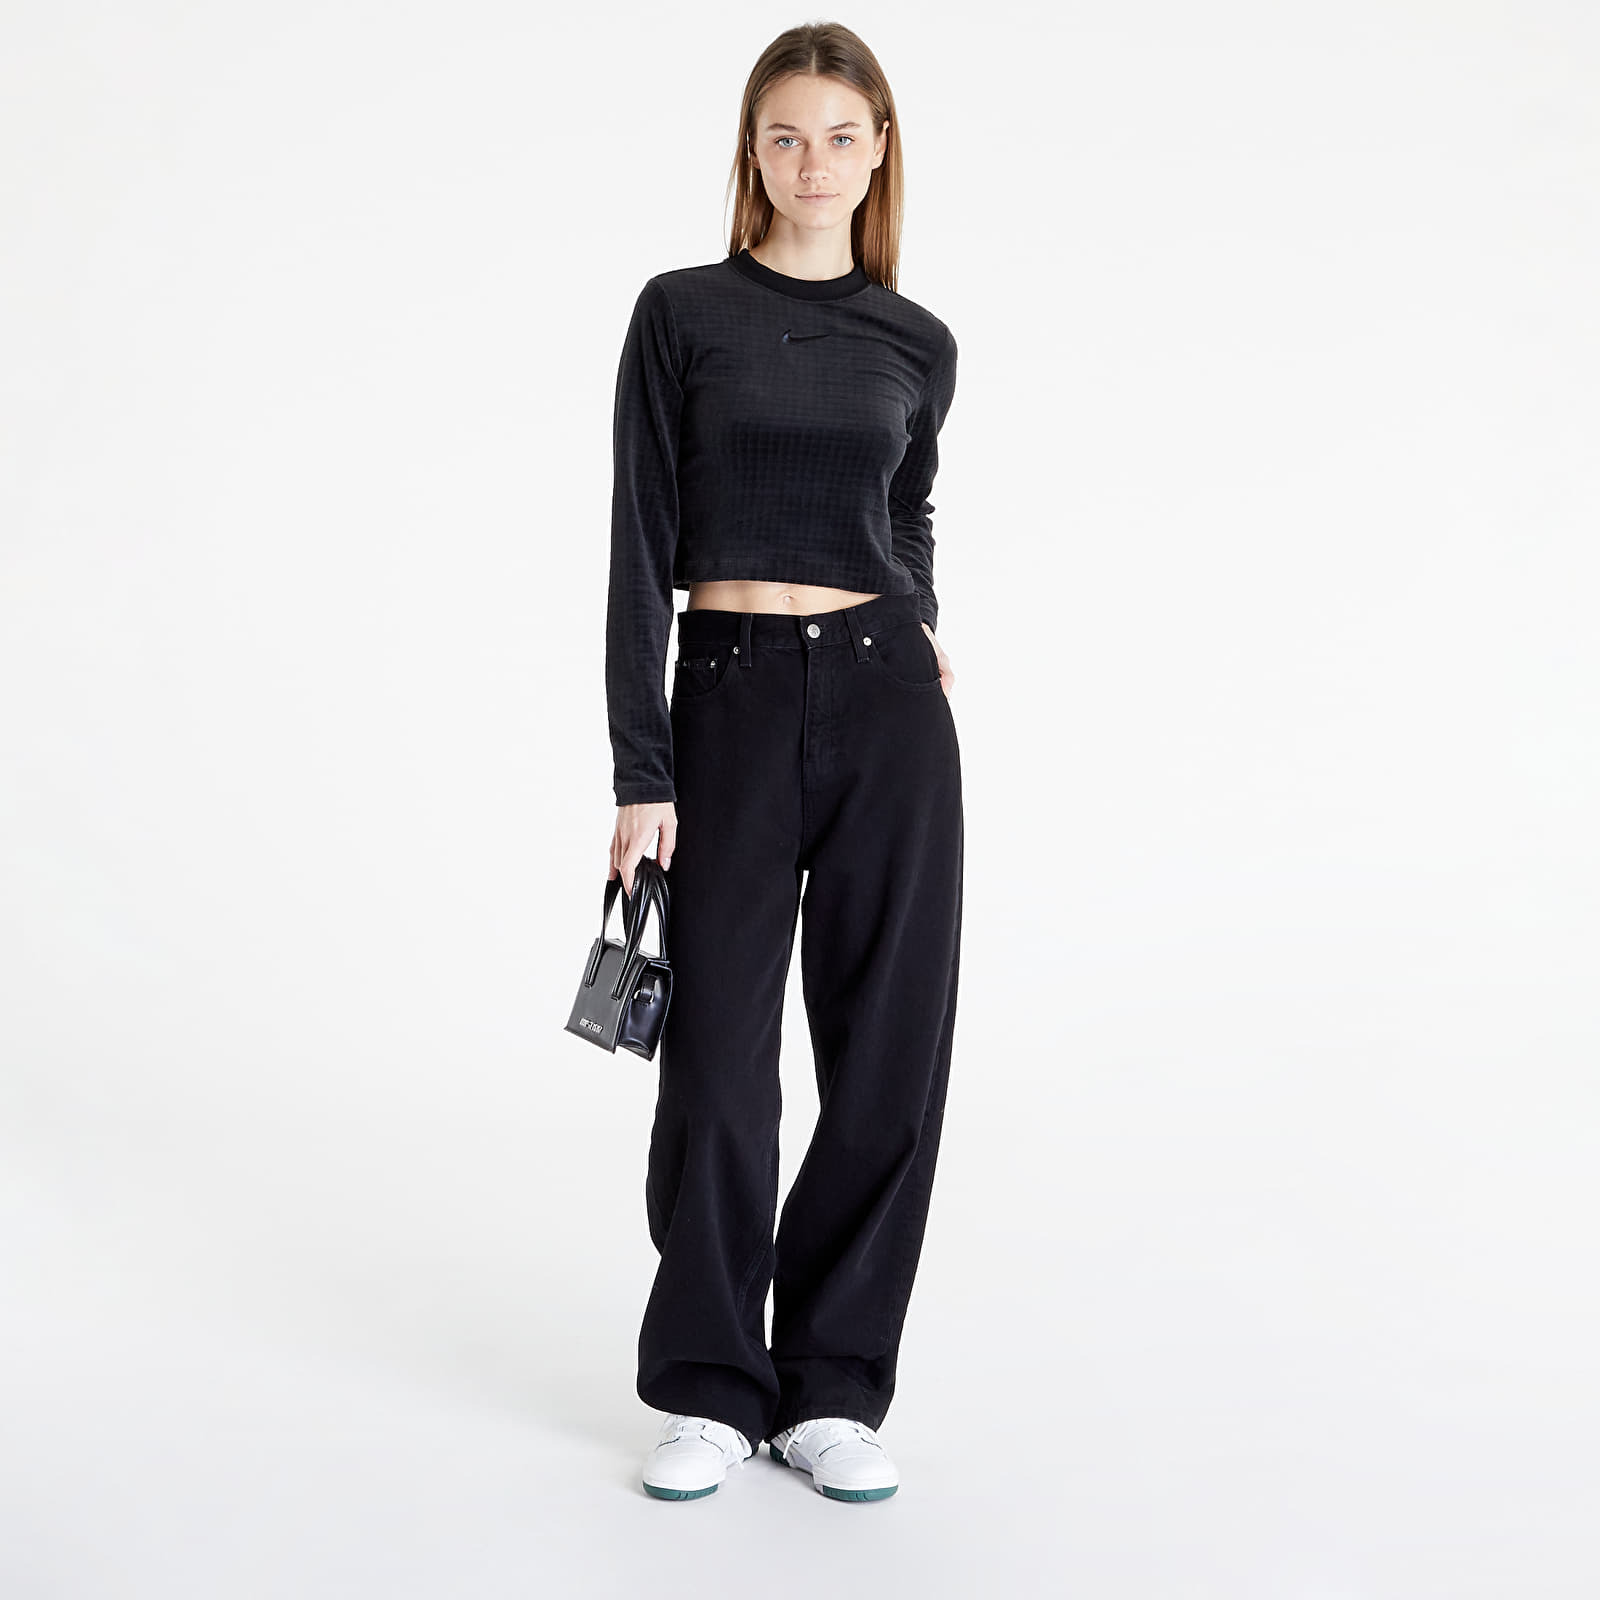 Levně Nike Sportswear Women's Velour Long-Sleeve Top Black/ Anthracite